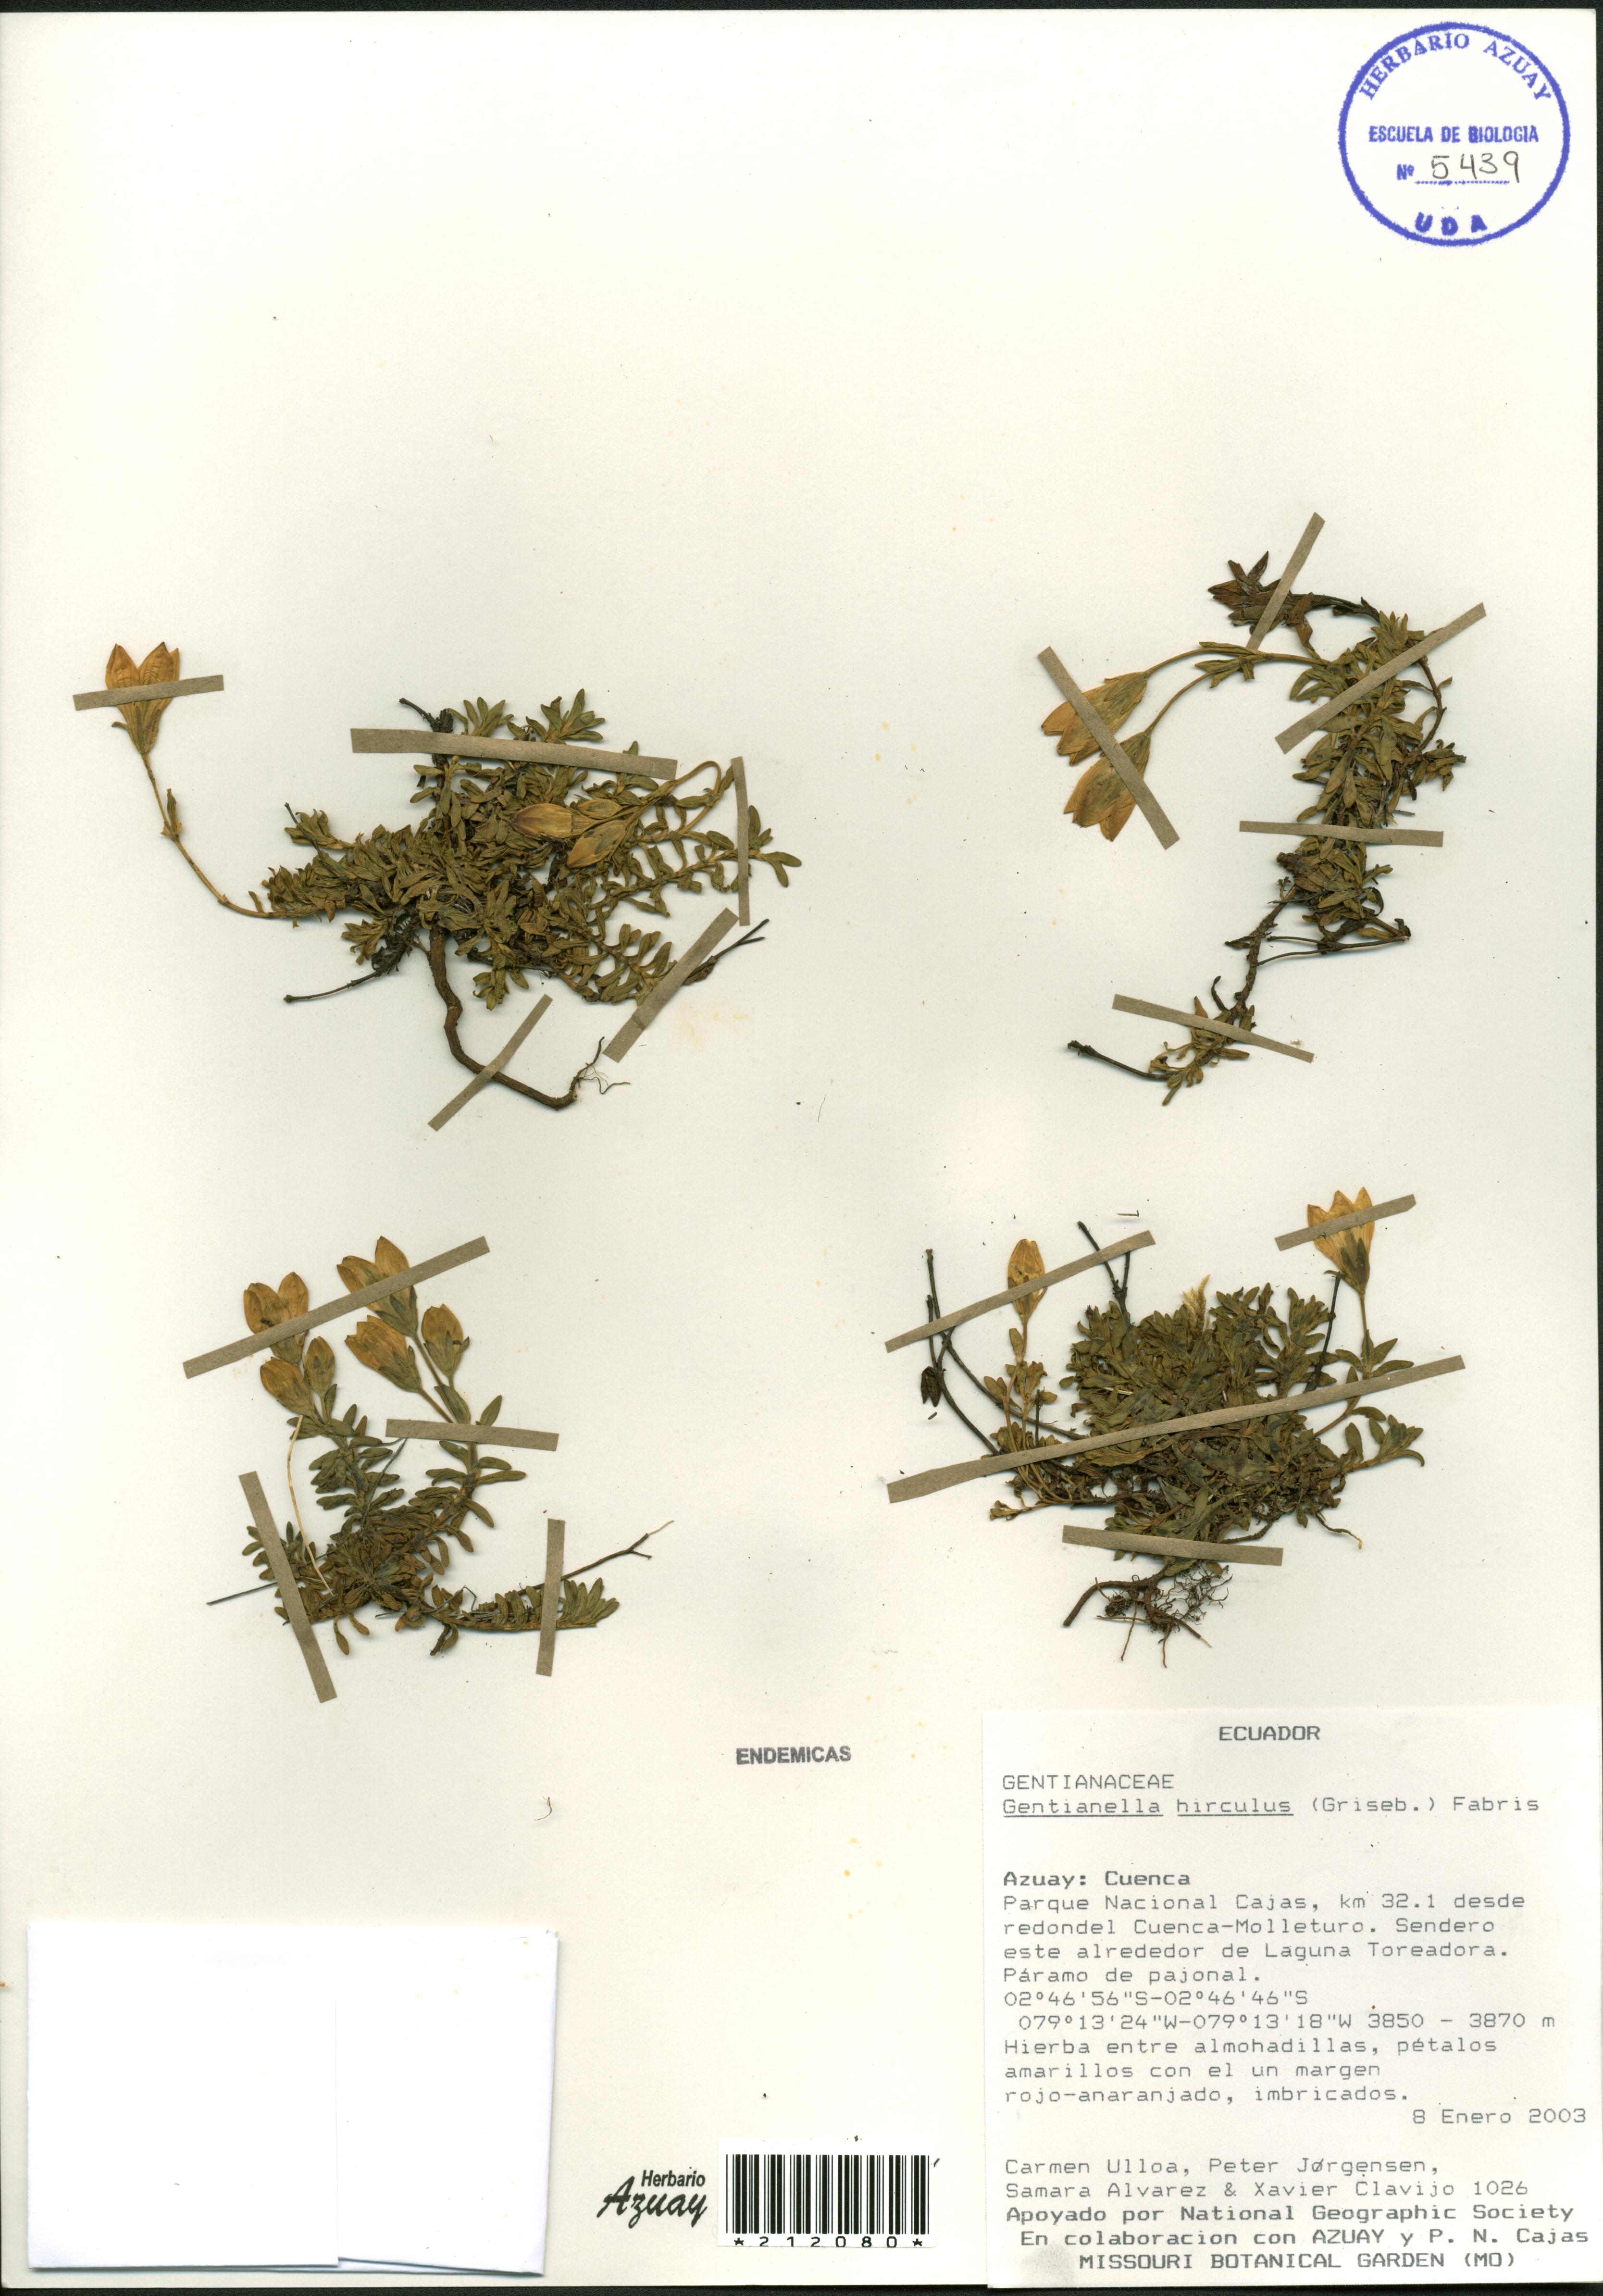 Gentianella rapunculoides (Willd. ex Schult.) J.S. Pringle